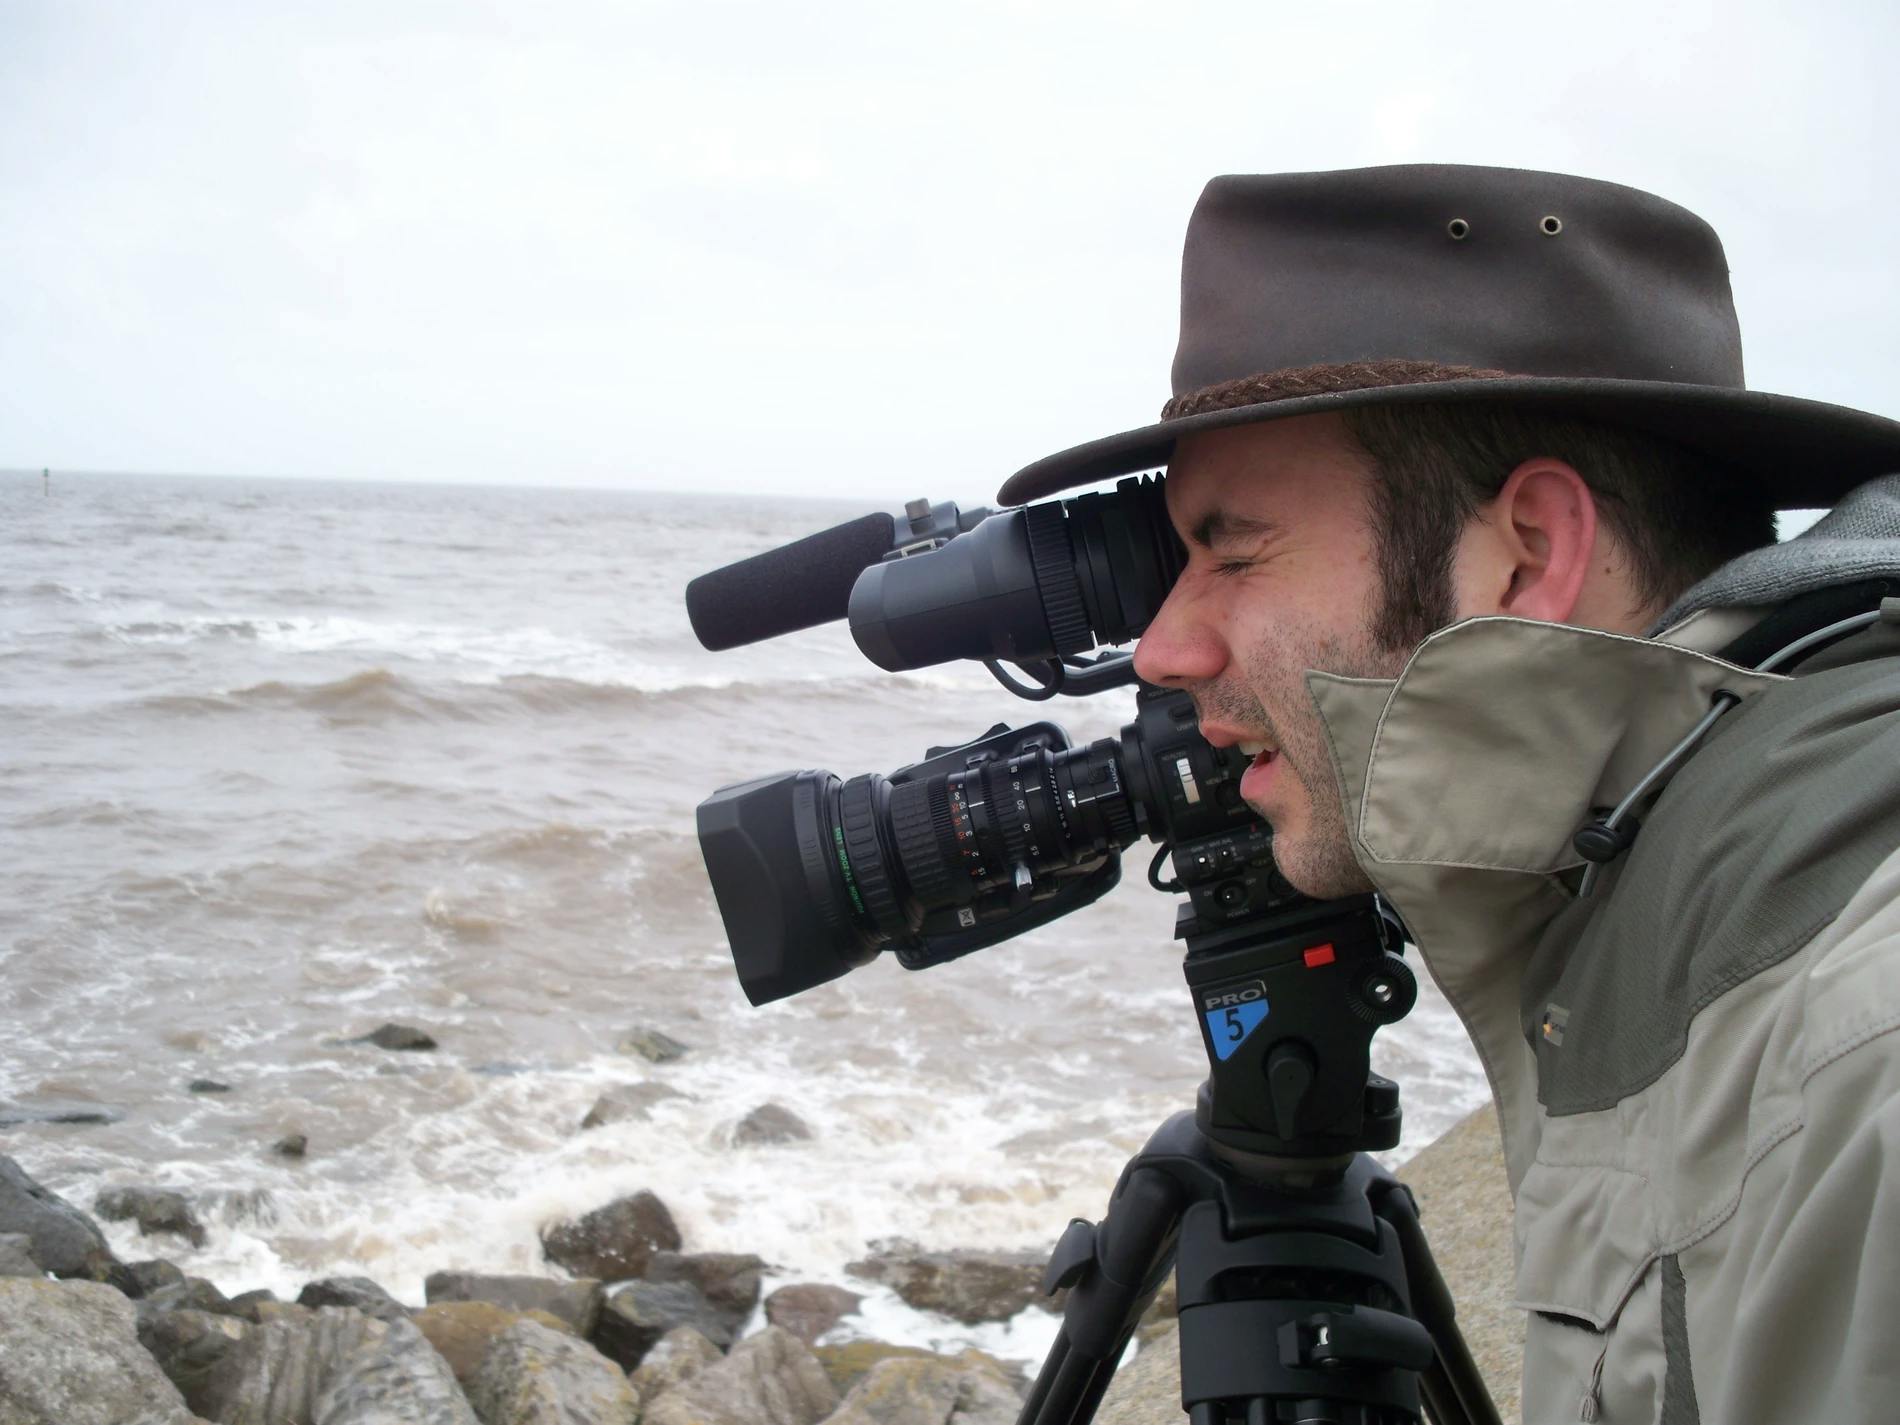 Cameraman shooting scene next to crashing waves of North Wales beach